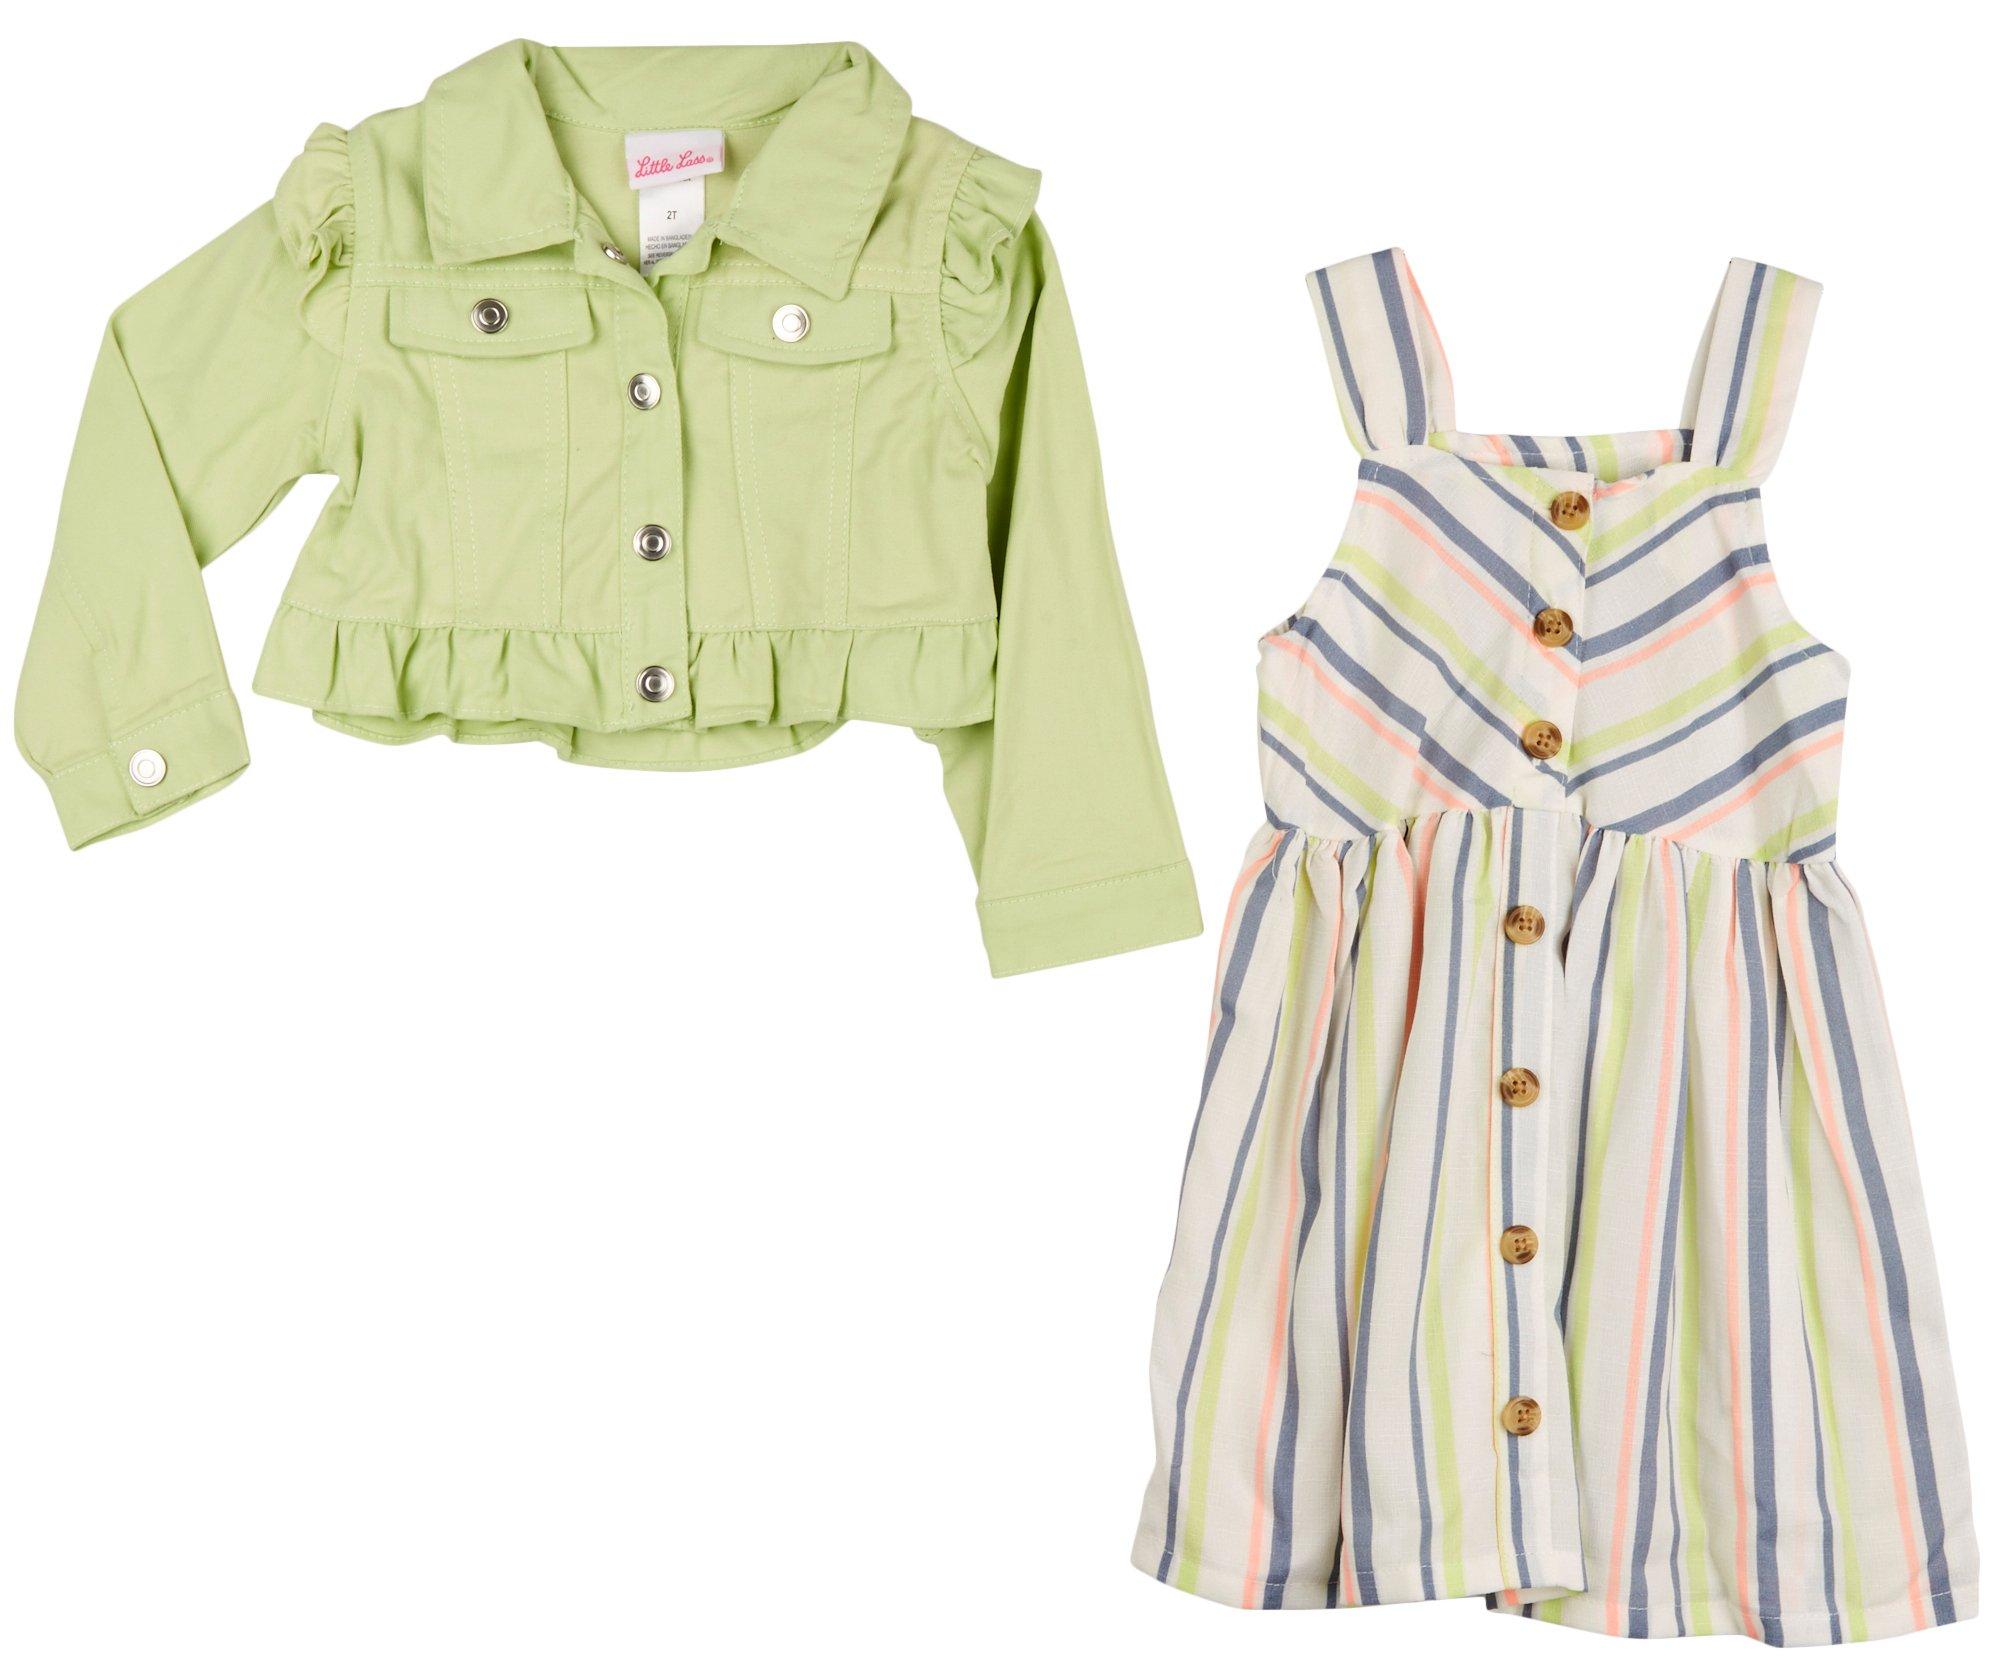 Toddler Girls 2 Pc Jacket and Dress Set